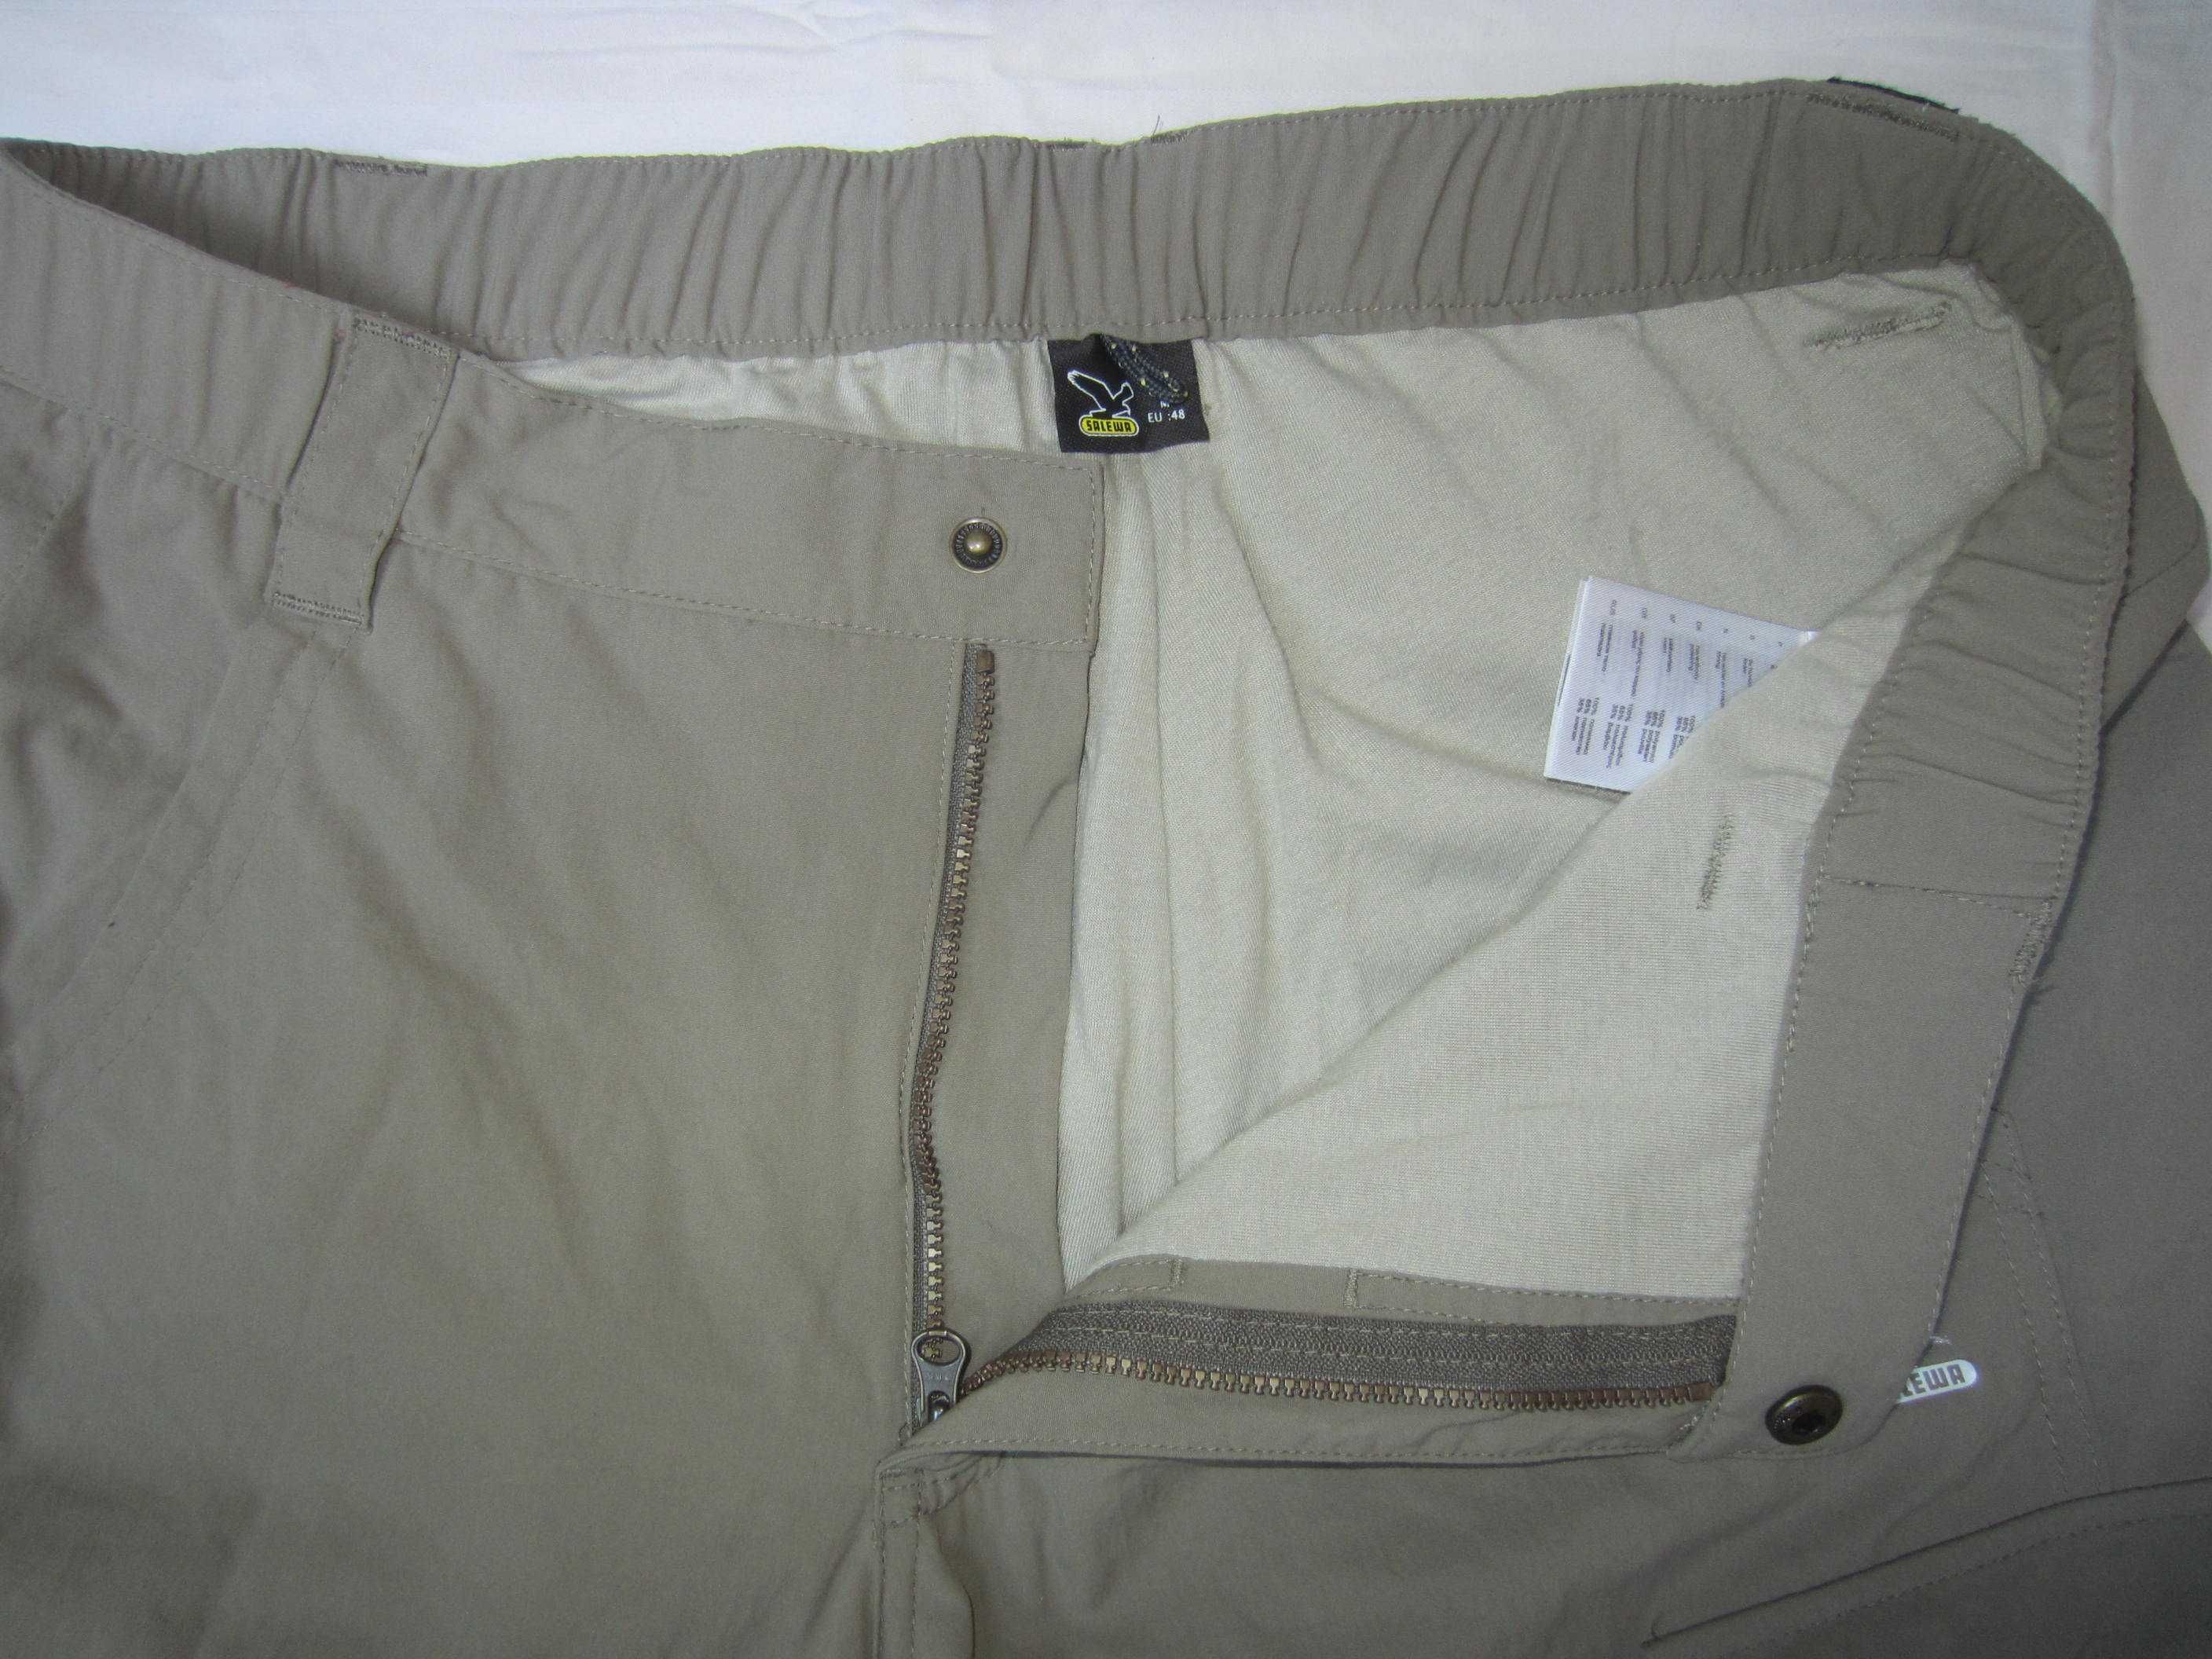 Pantalon drumetie Salewa,mas. 48,dublat interior,fermoar,stare f. buna